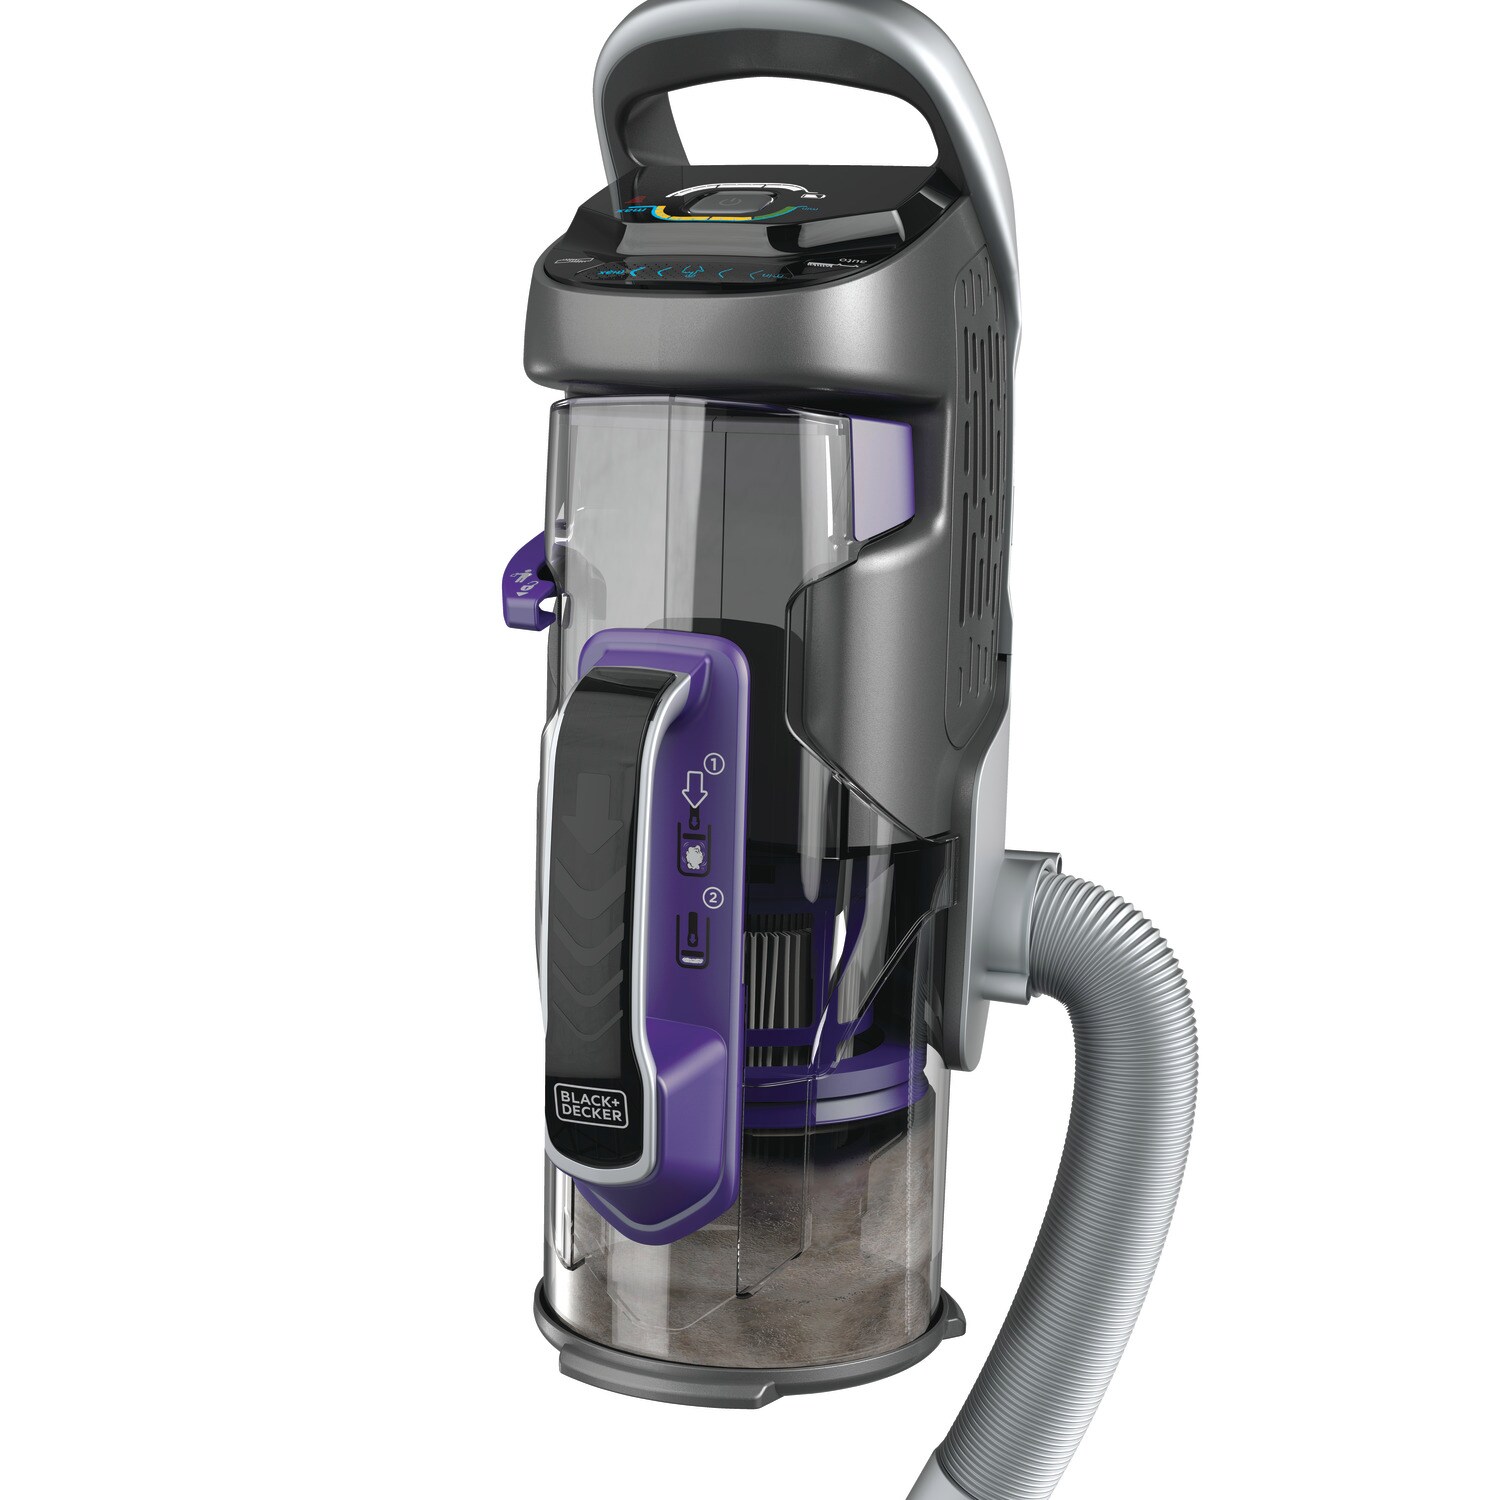 Black & Decker Multipower Pet Cordless Vacuum Cleaner Review